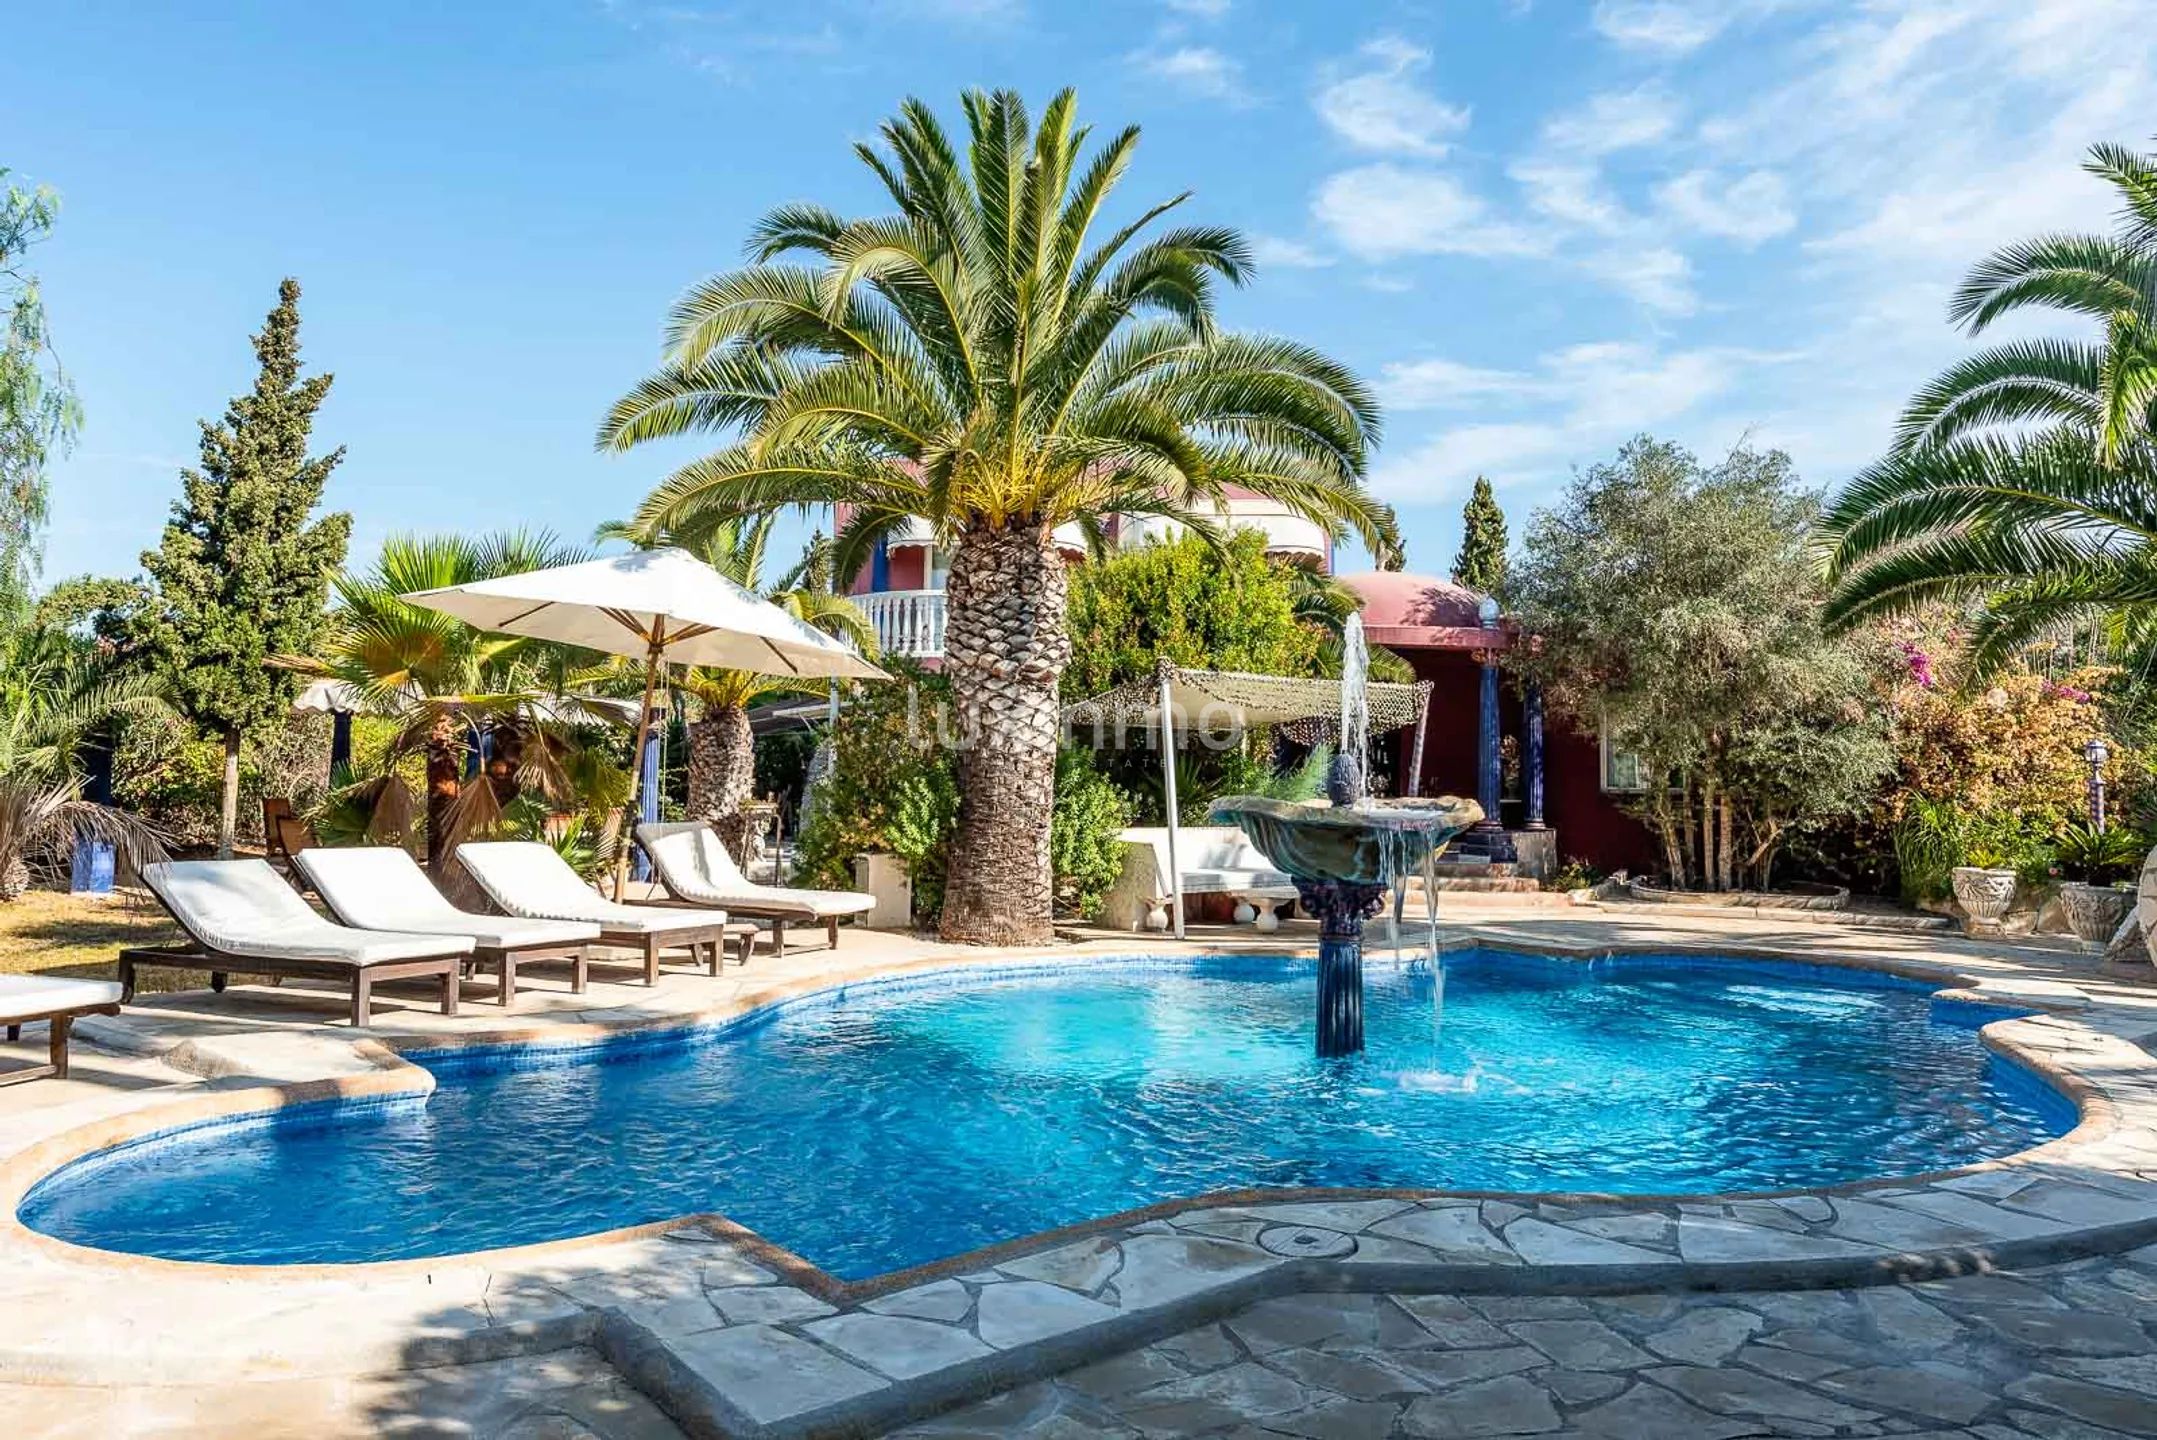 Villa Aladin: Authentic Arab-inspired Villa with Tropical Garden in Sant Jordi, Ibiza